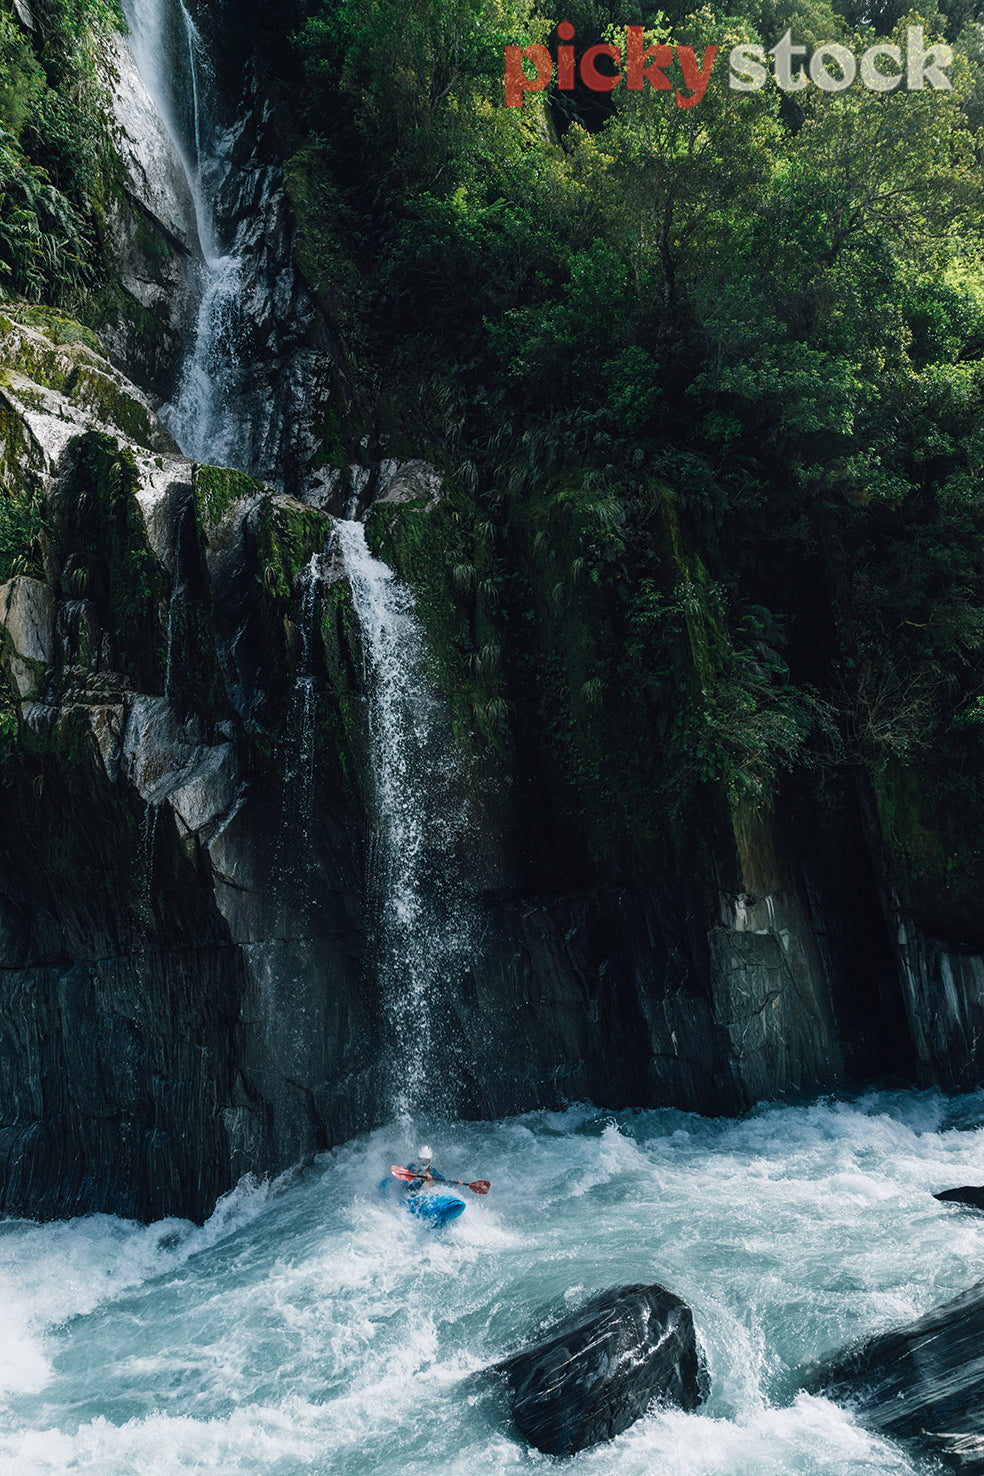 Whitewater kayaker paddling underneath a waterfall